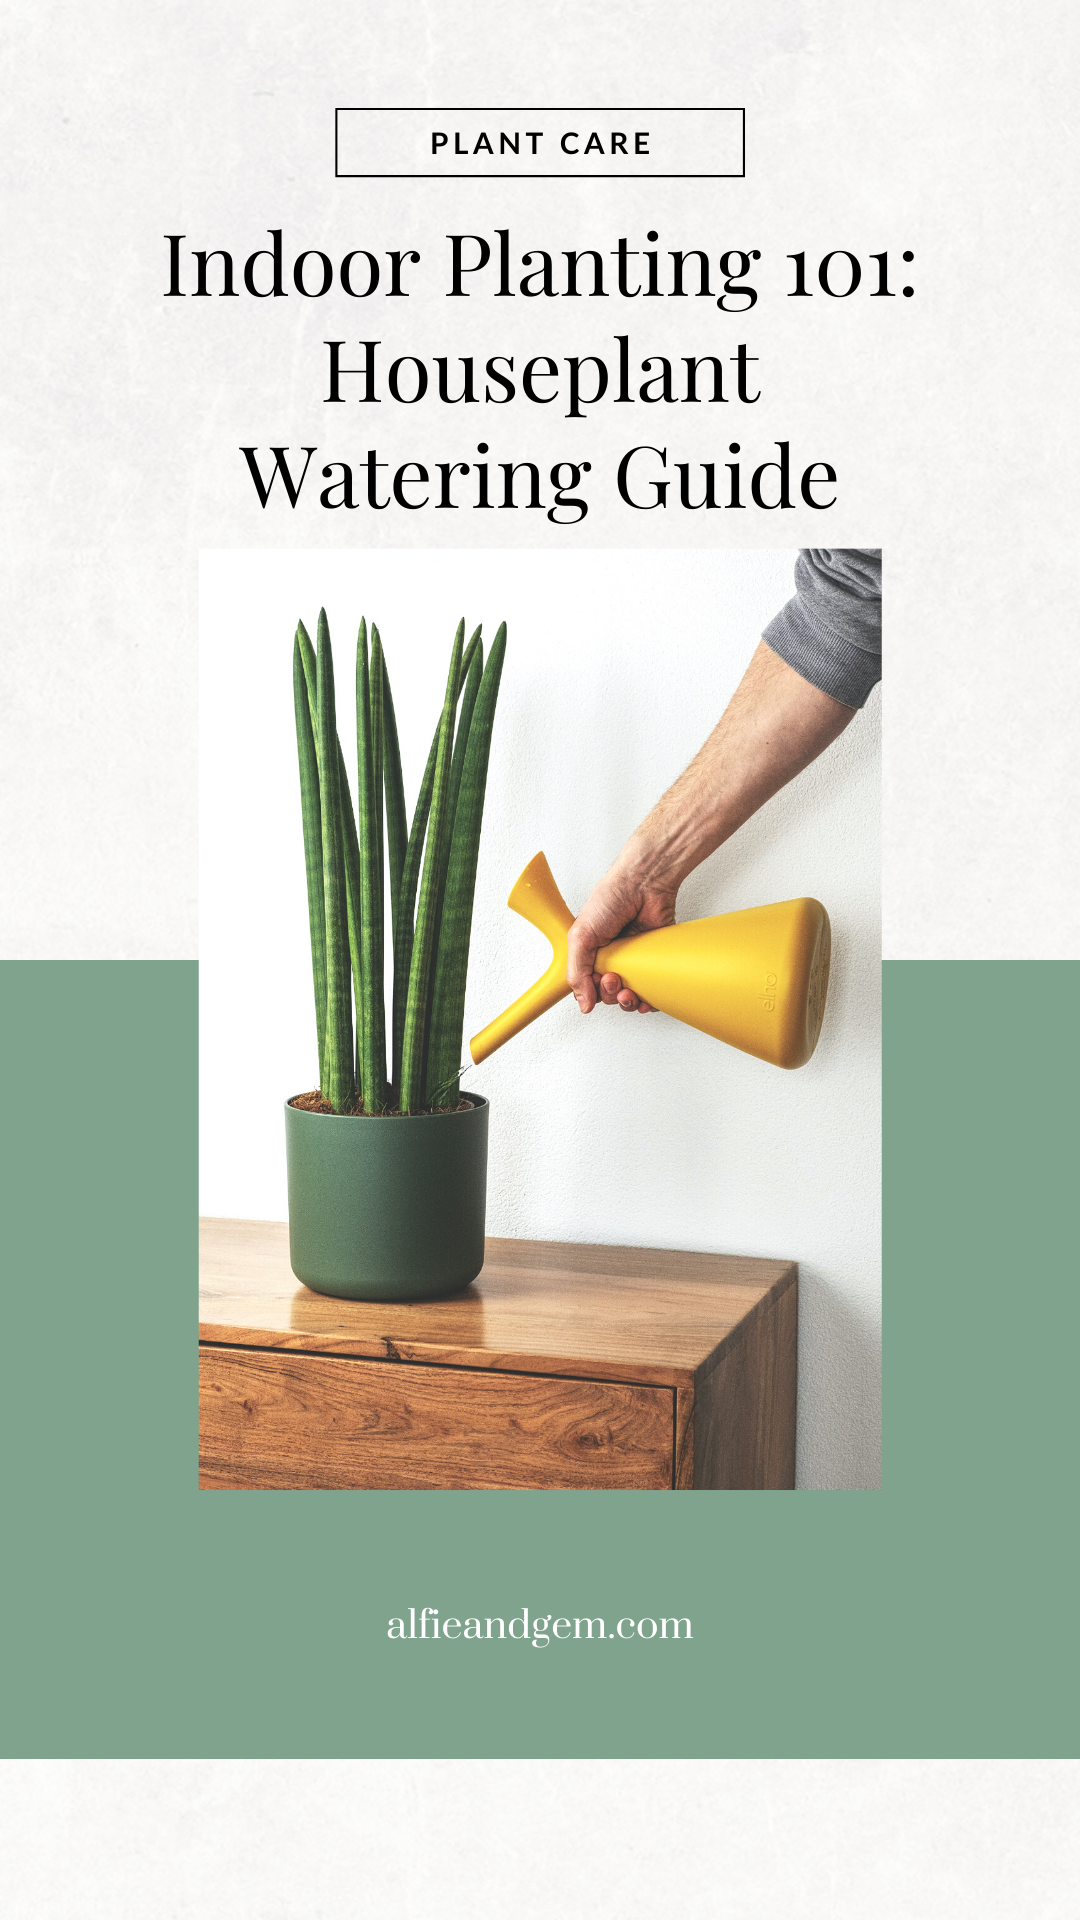 Houseplant Watering Guide